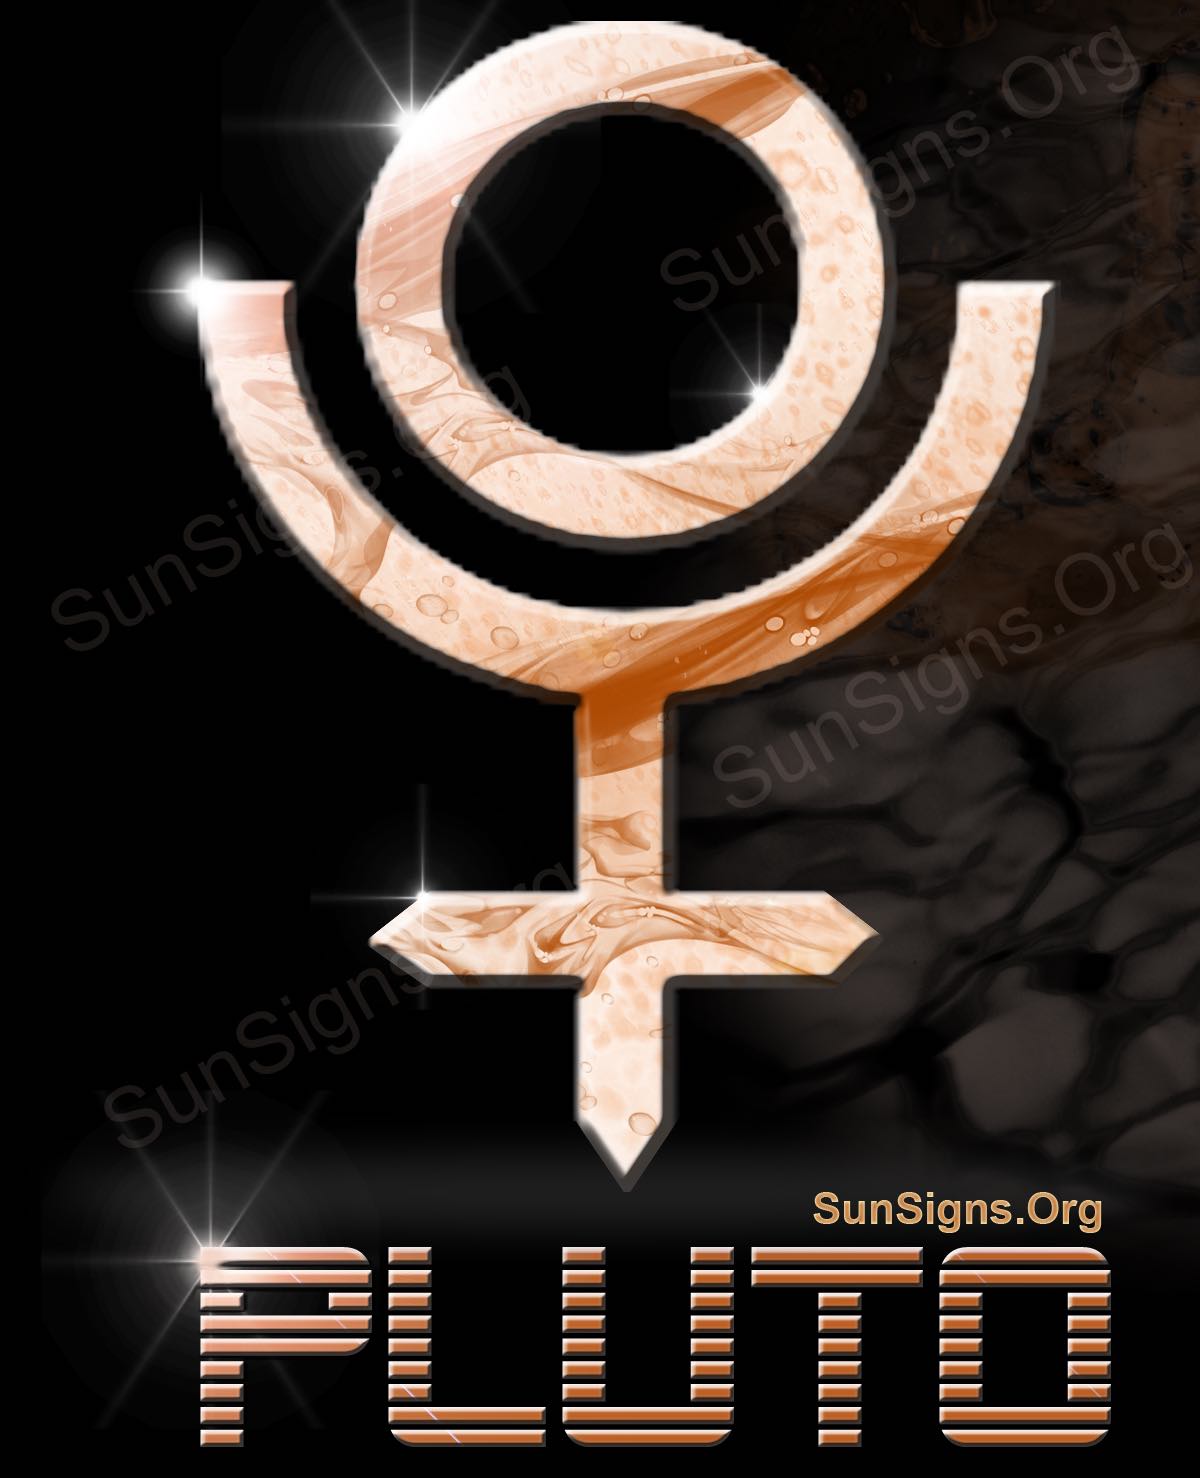 pluto god symbol